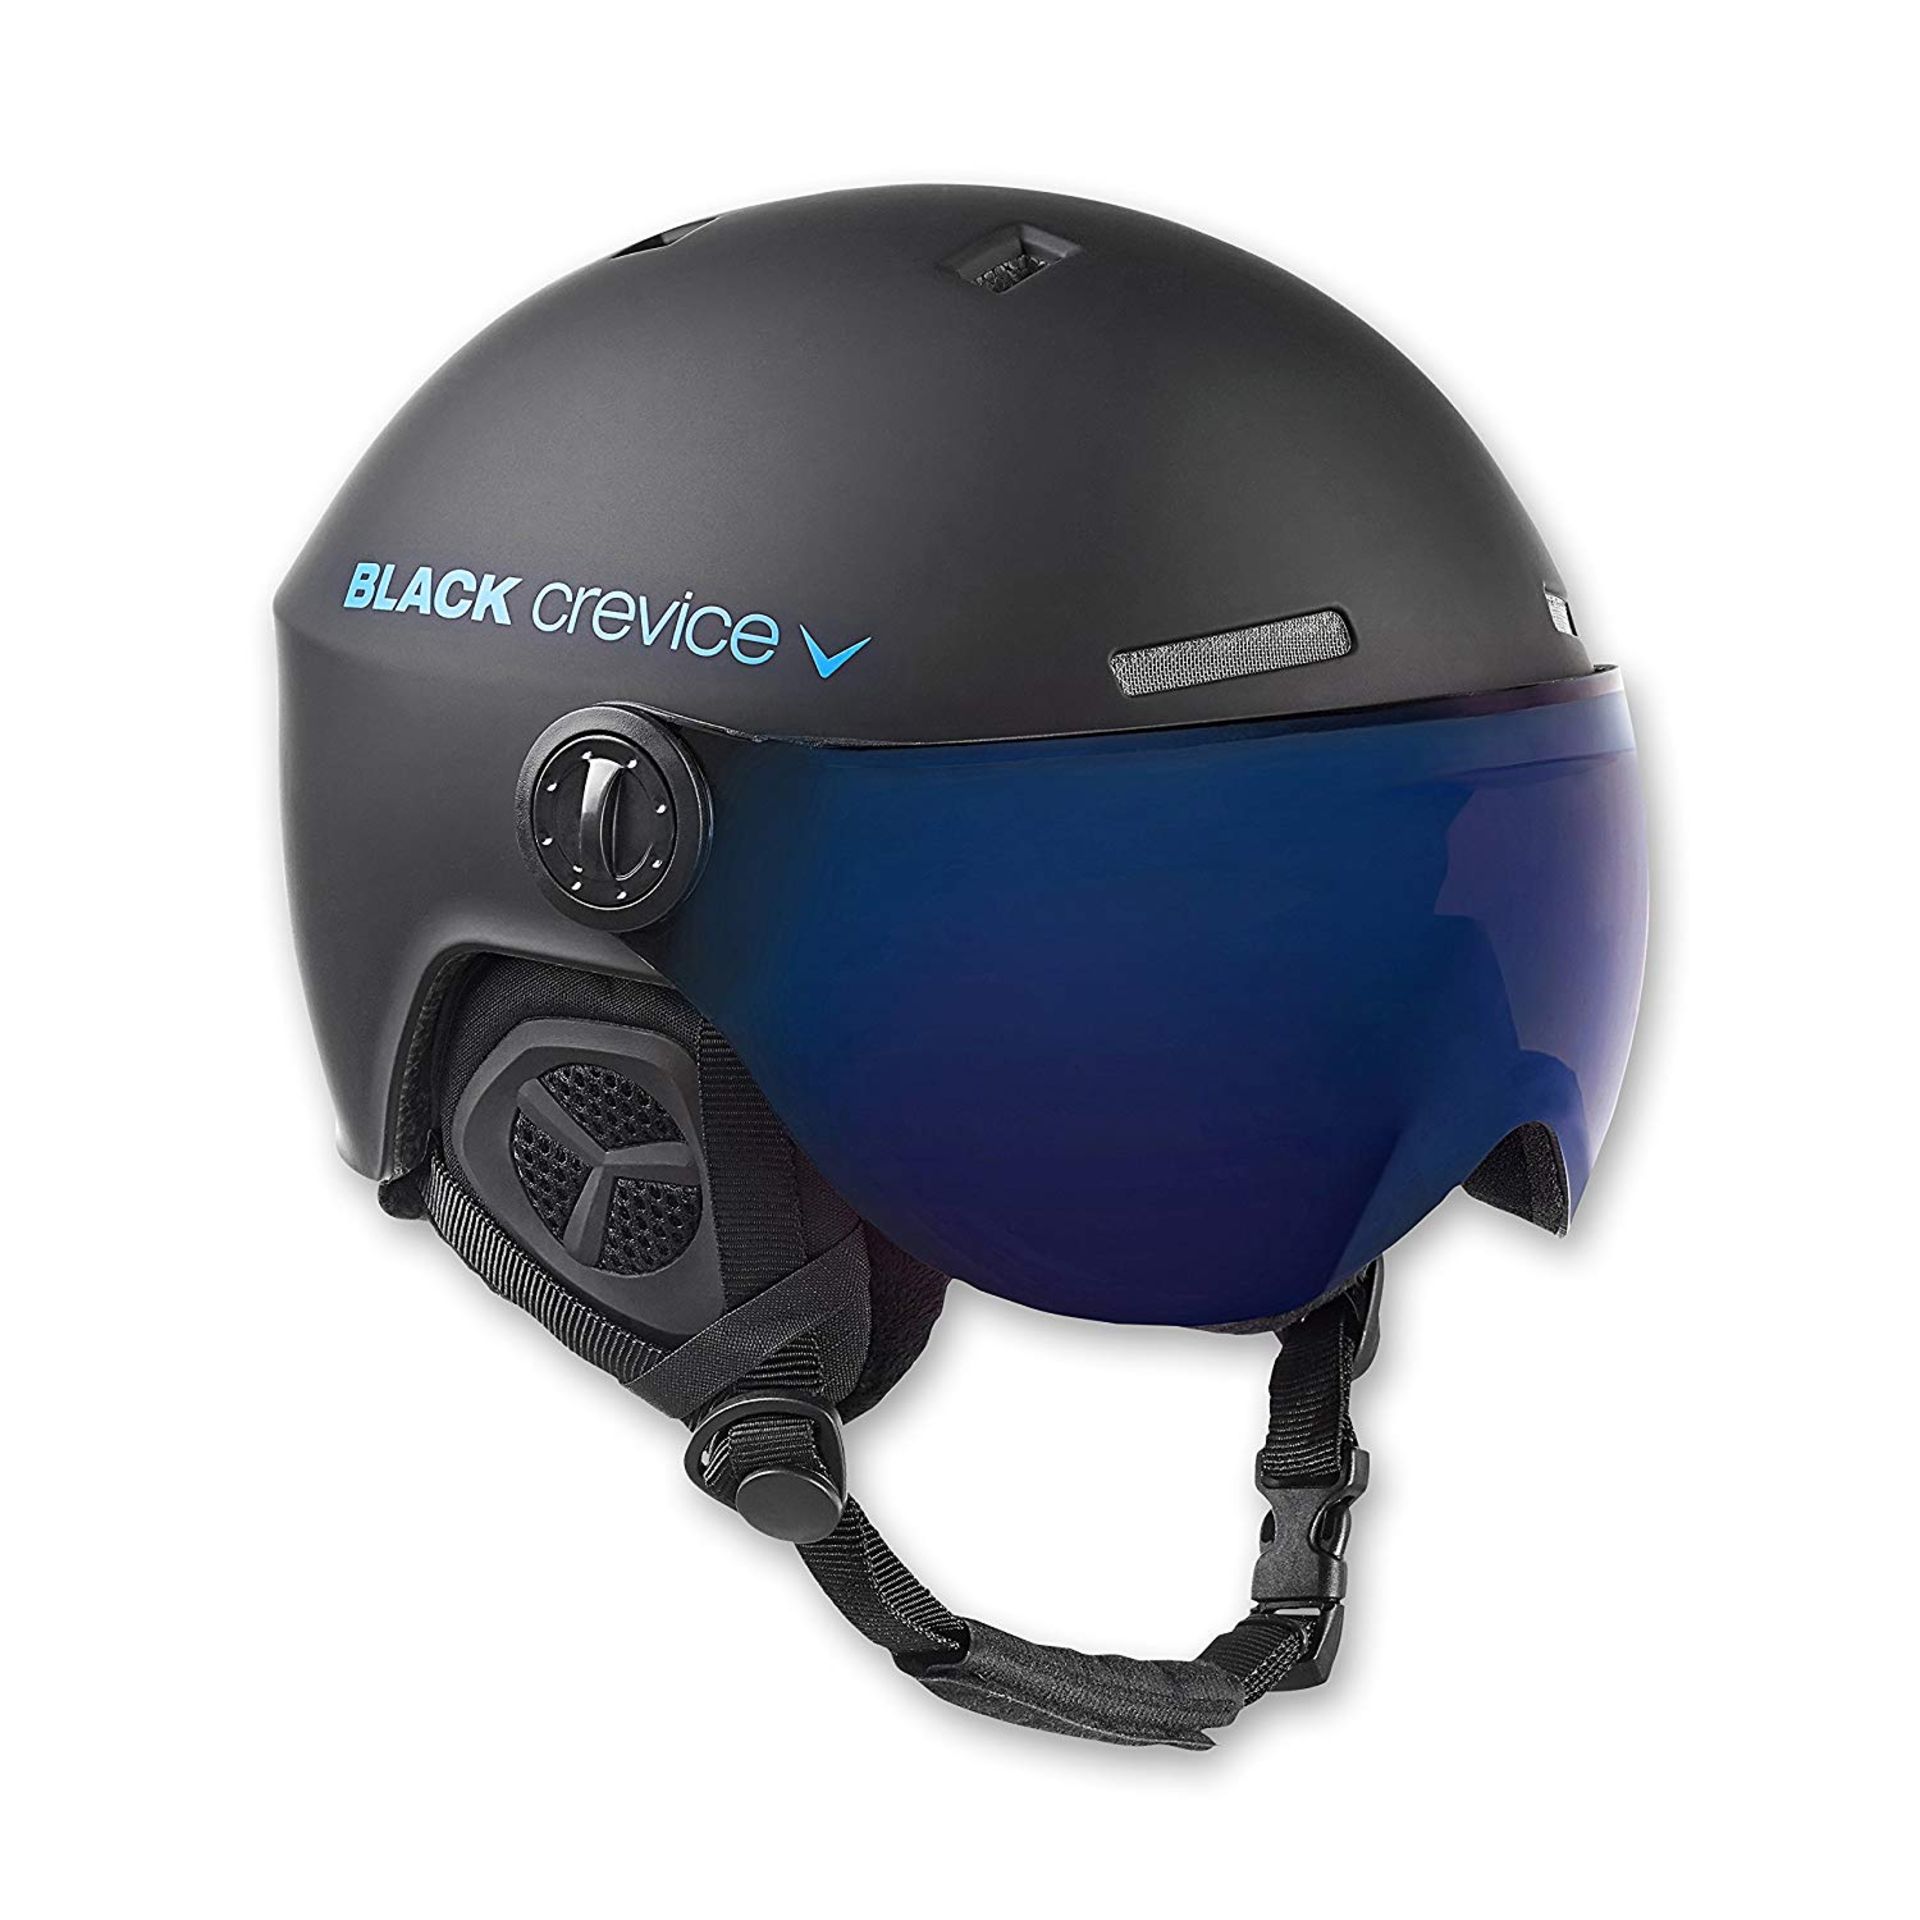 Brand new Black Crevice Gstaad Ski Helmet Size:M/L RRP £169.99.